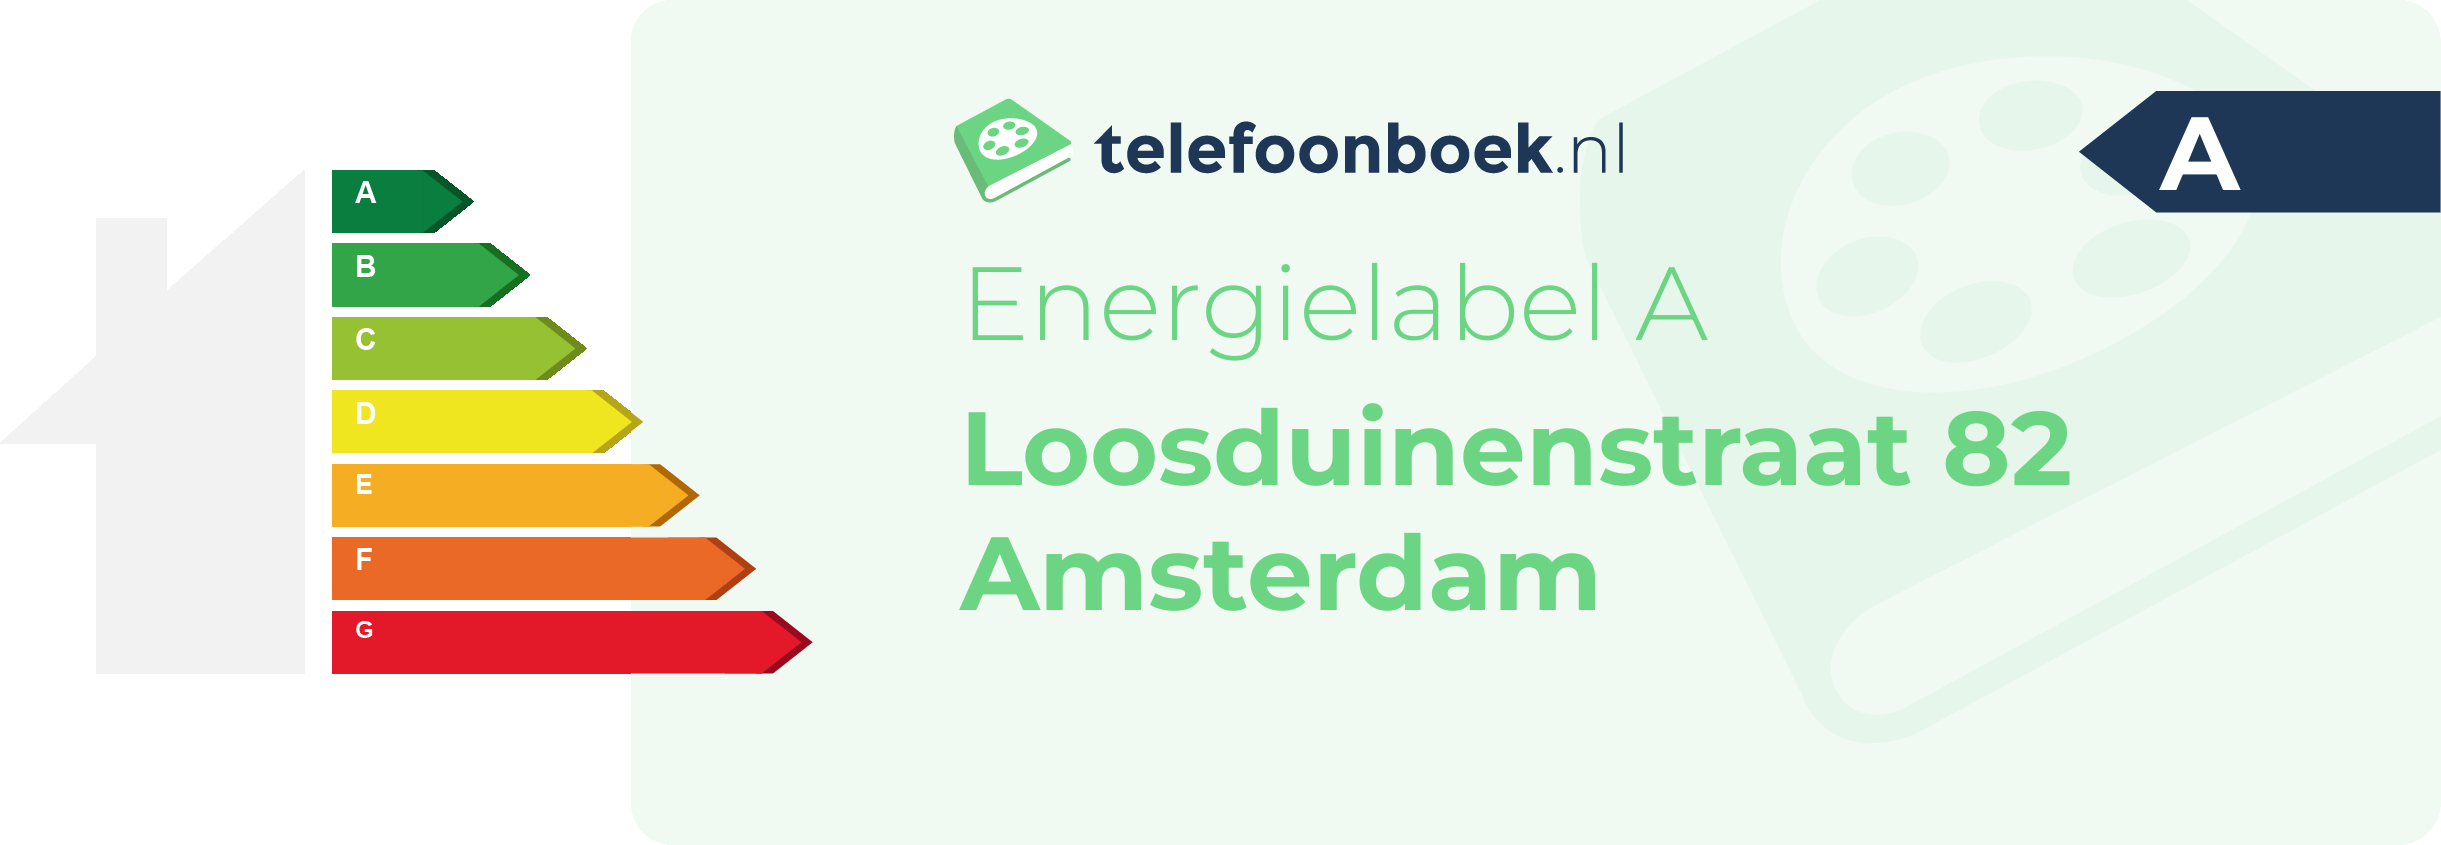 Energielabel Loosduinenstraat 82 Amsterdam